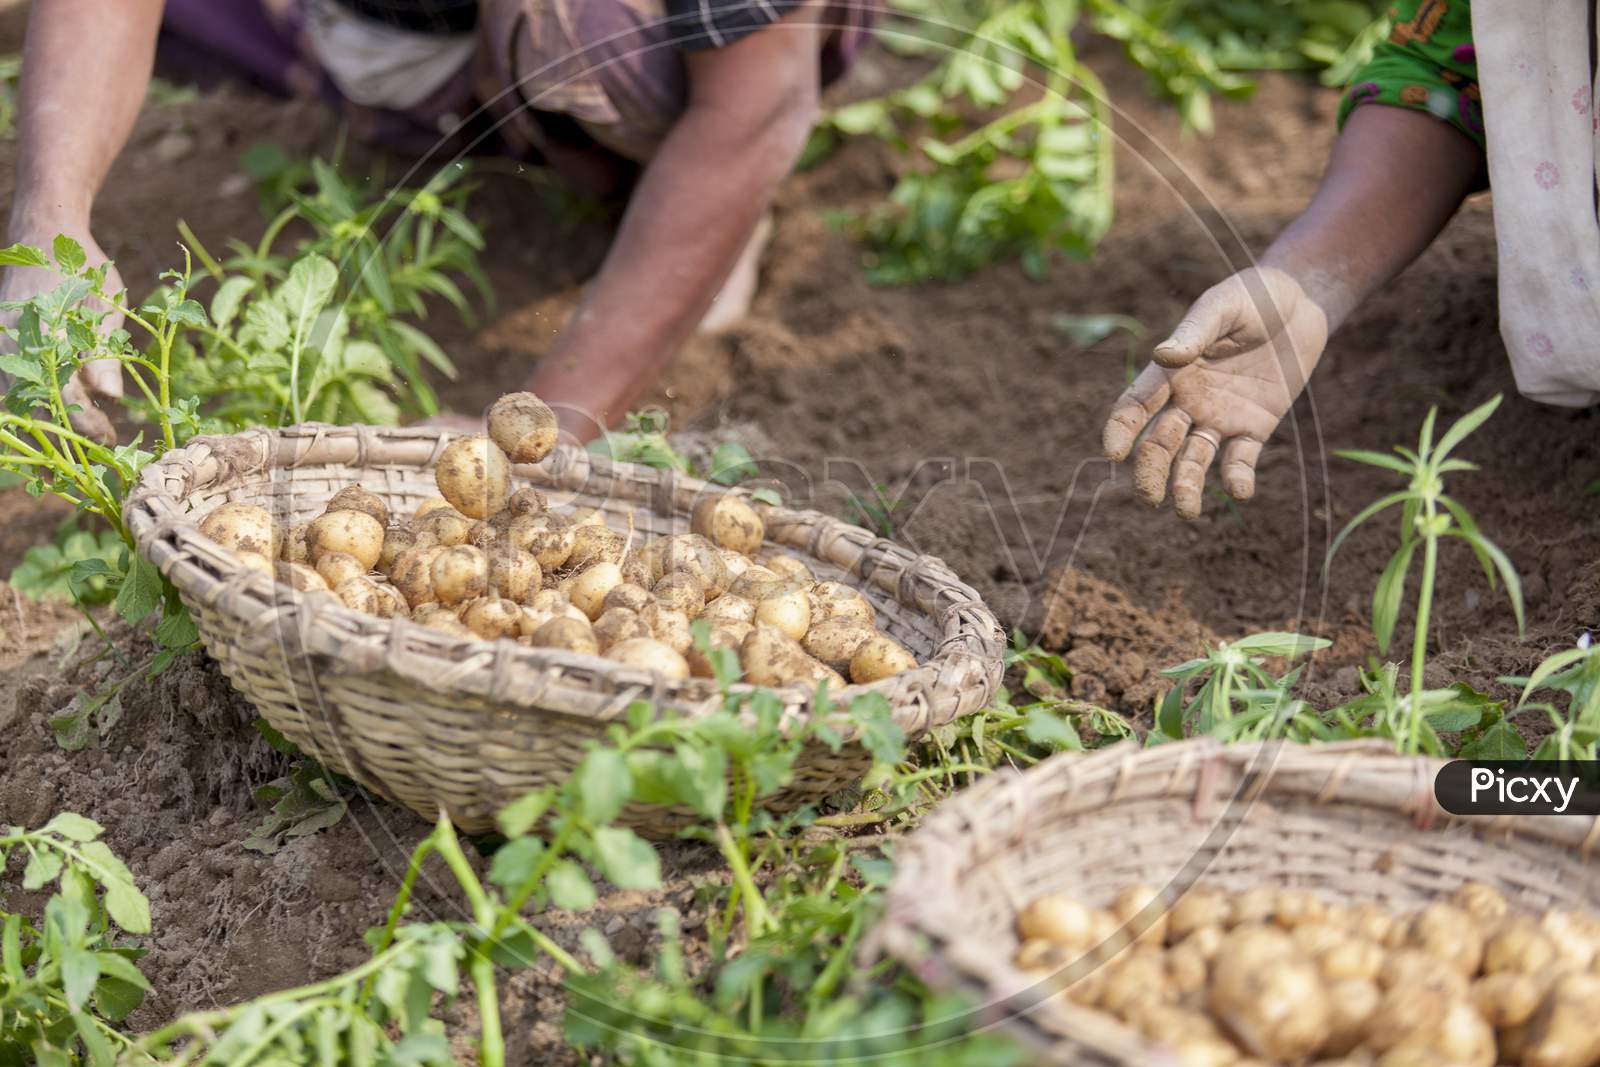 Roots Full Potatoes Are Showing A Worker At Thakurgong, Bangladesh.